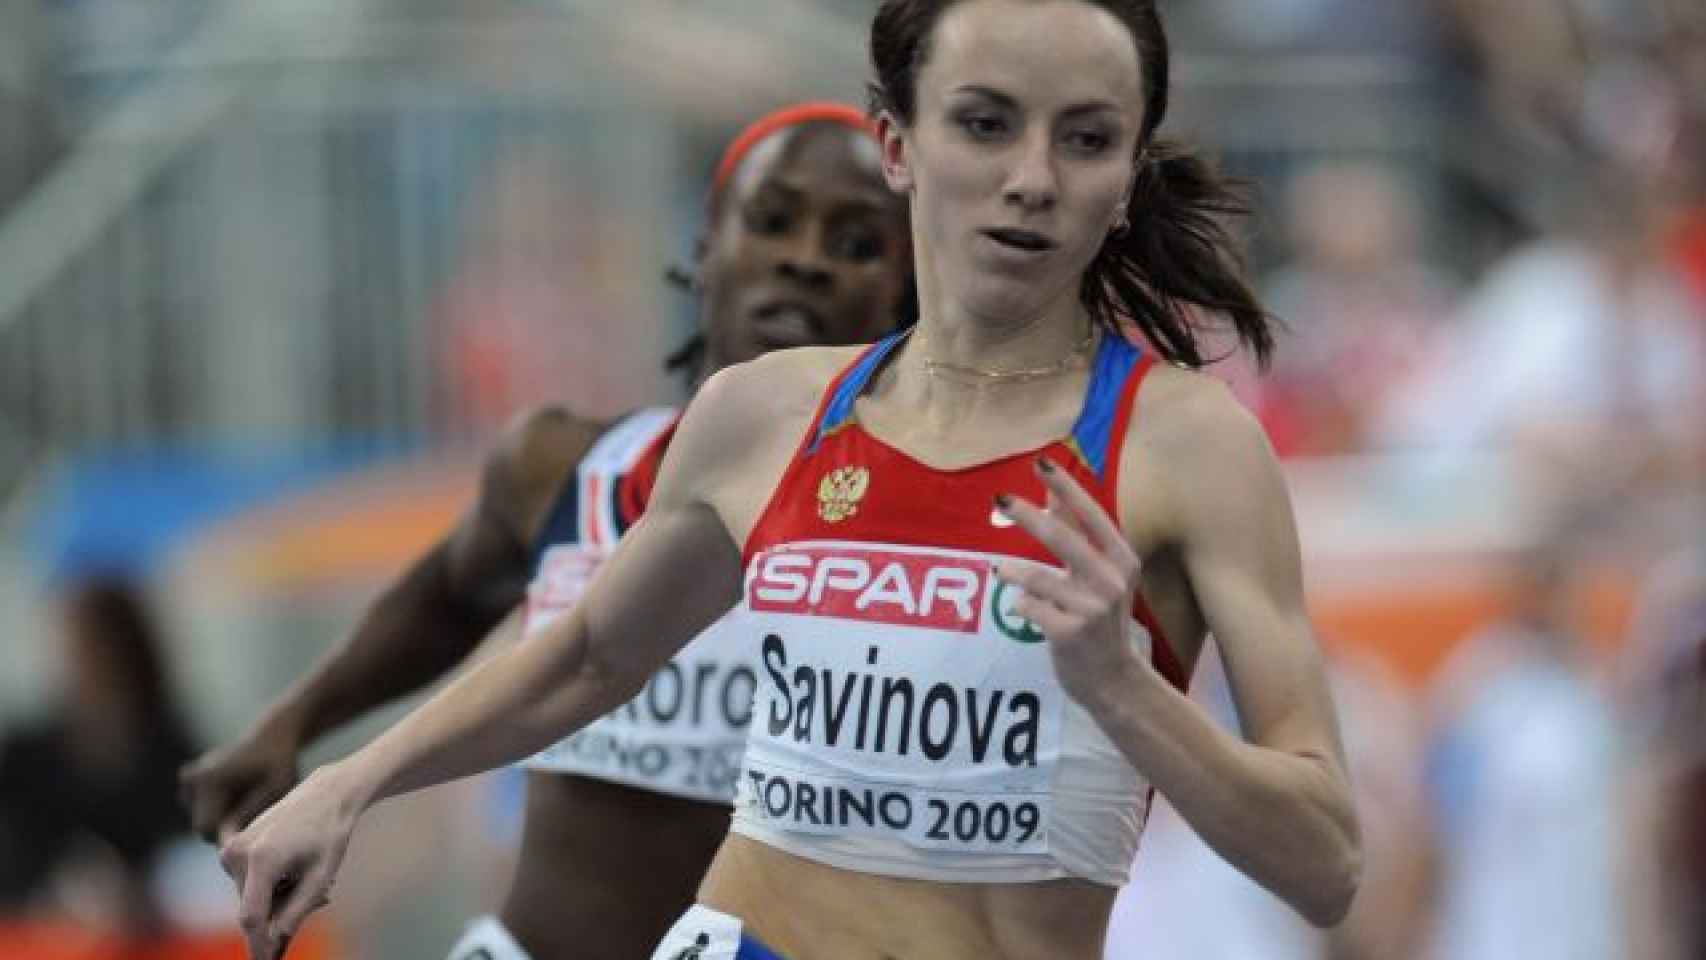 Maria Savinova en un campeonato de atletismo en 2009 en Turín